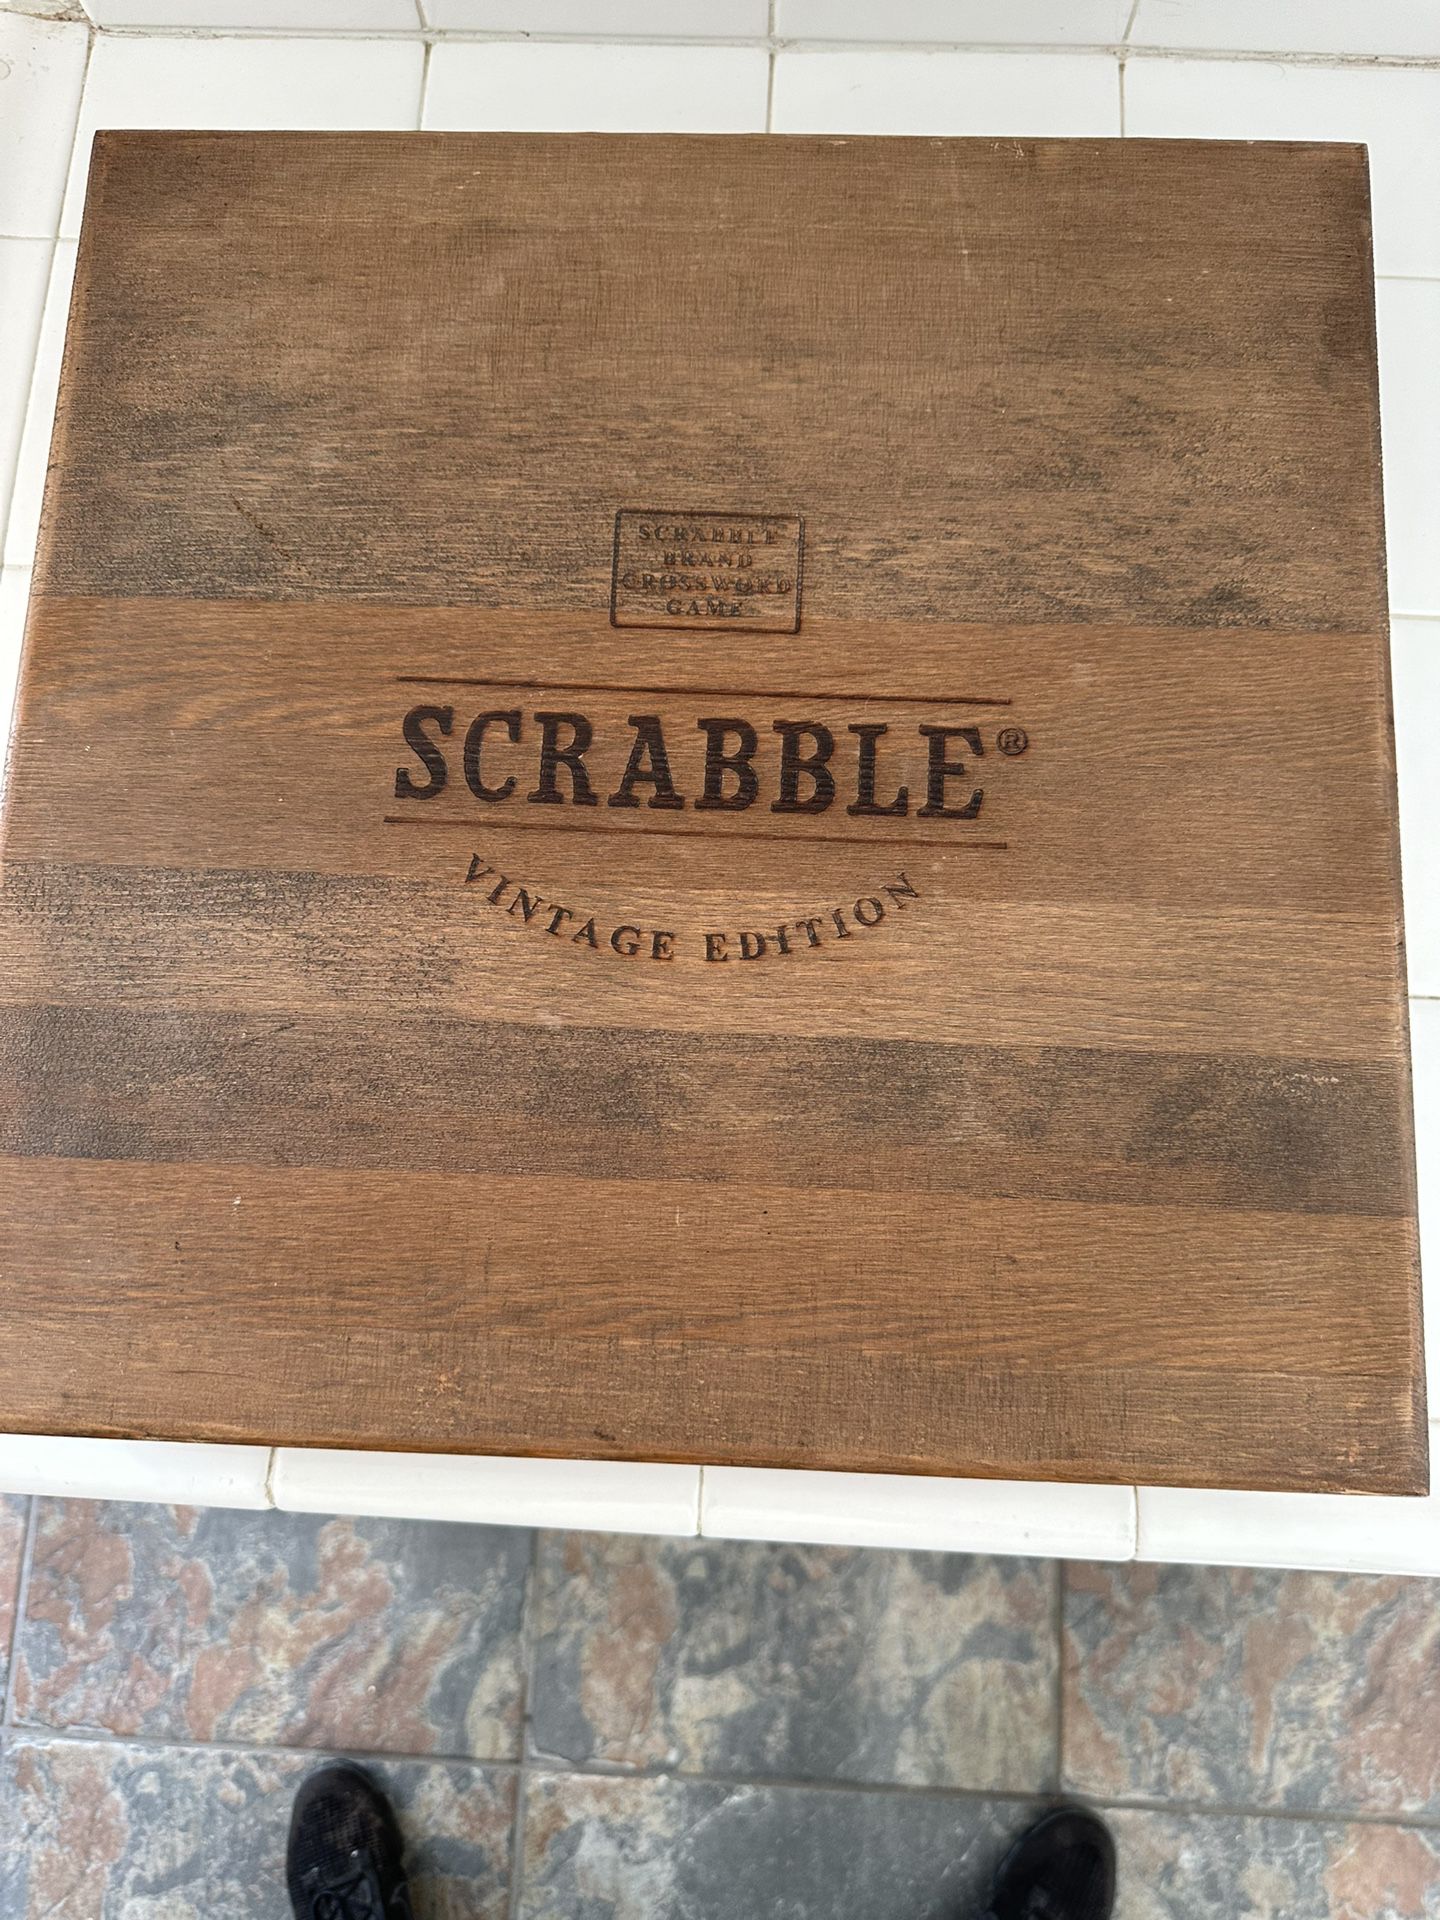 Vintage Edition Scrabble